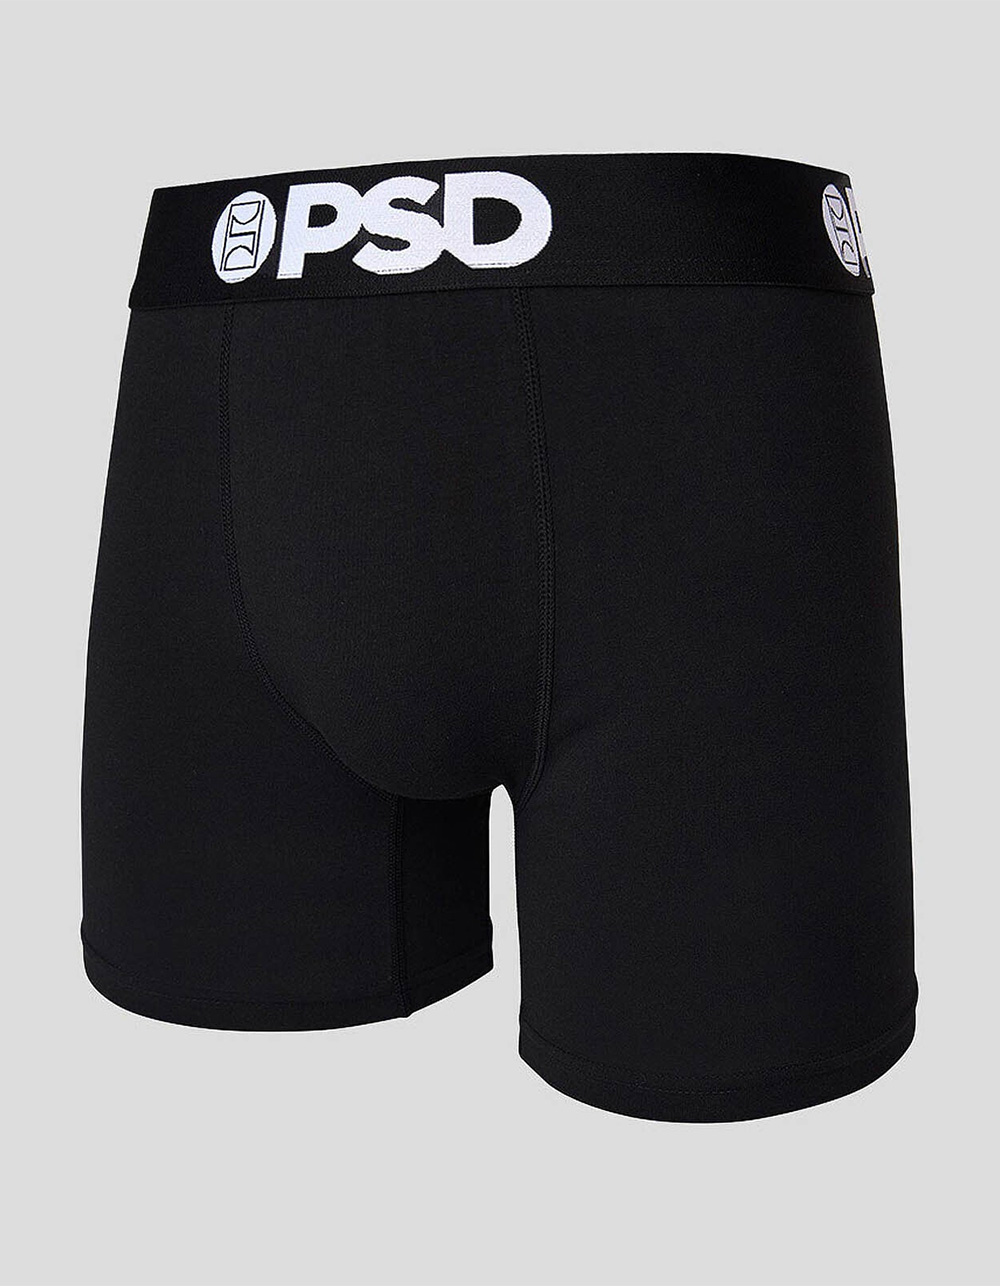 PSD Women Solids Sports Bra (Black)